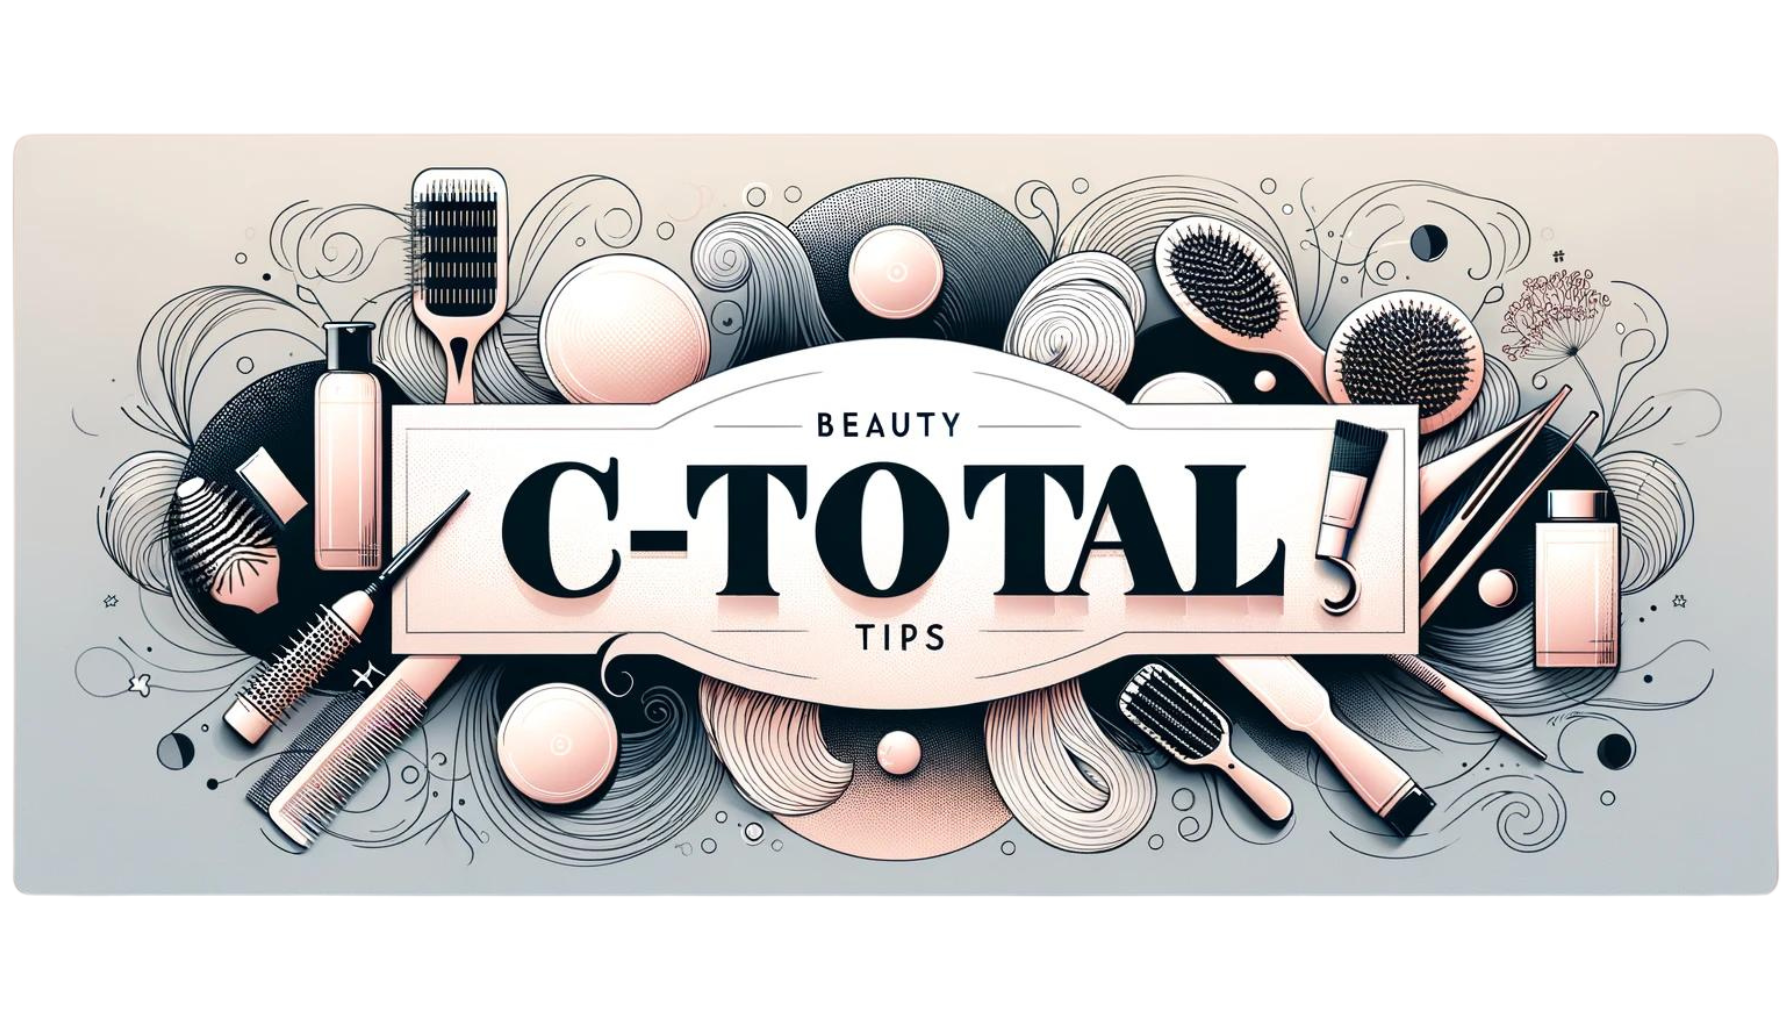 c-total hair tips tricks blog